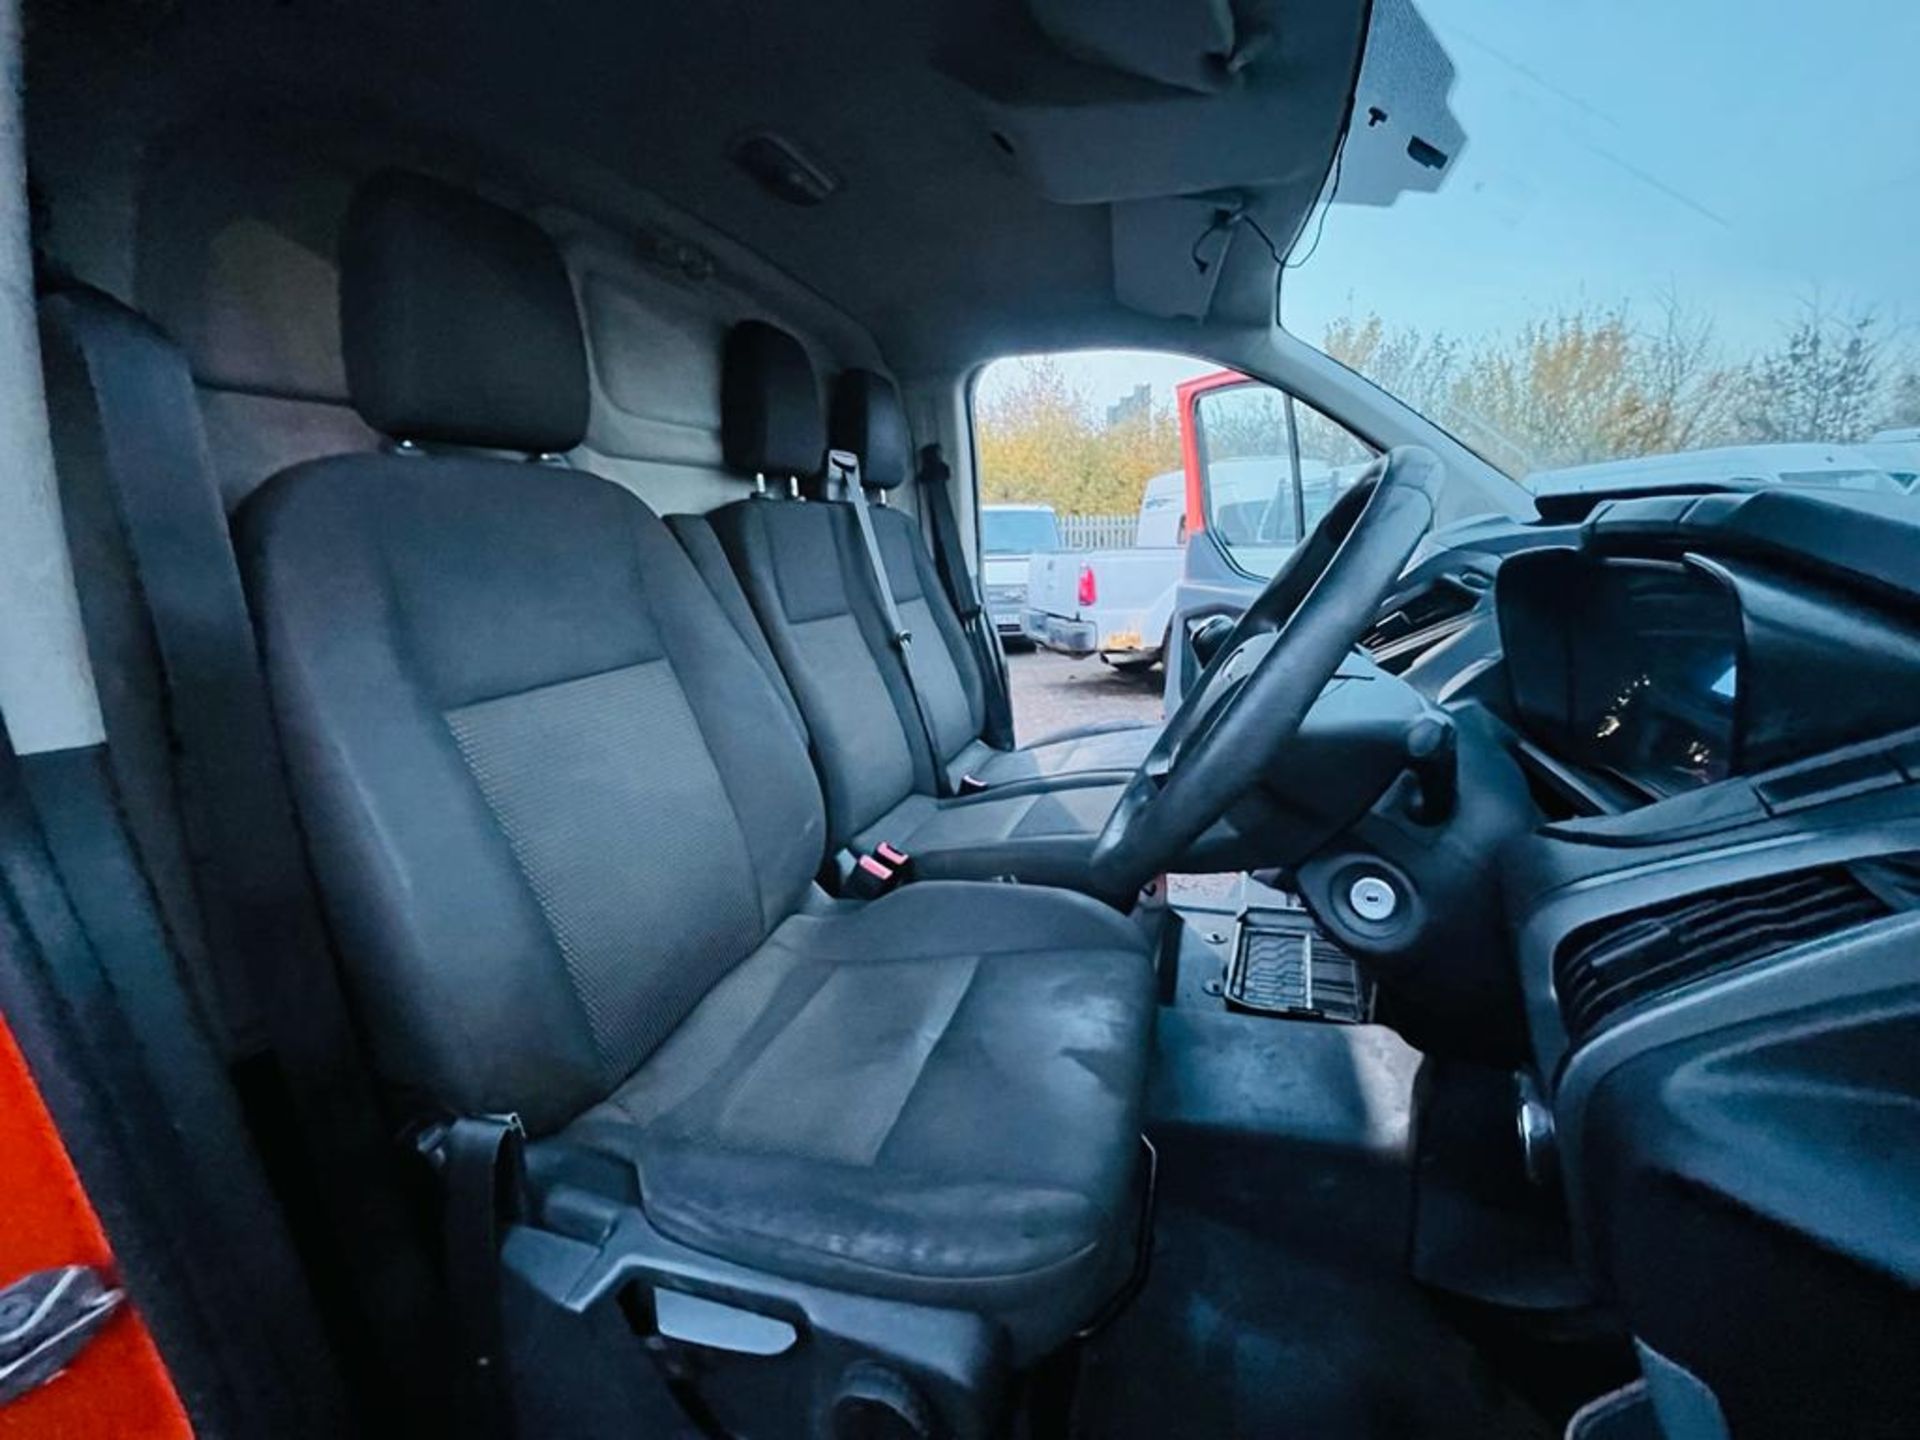 Ford Transit Custom 2.2 TDCI 100 290 LWB H3 2015 '65 Reg' Panel Van - Van Vault - Image 20 of 30